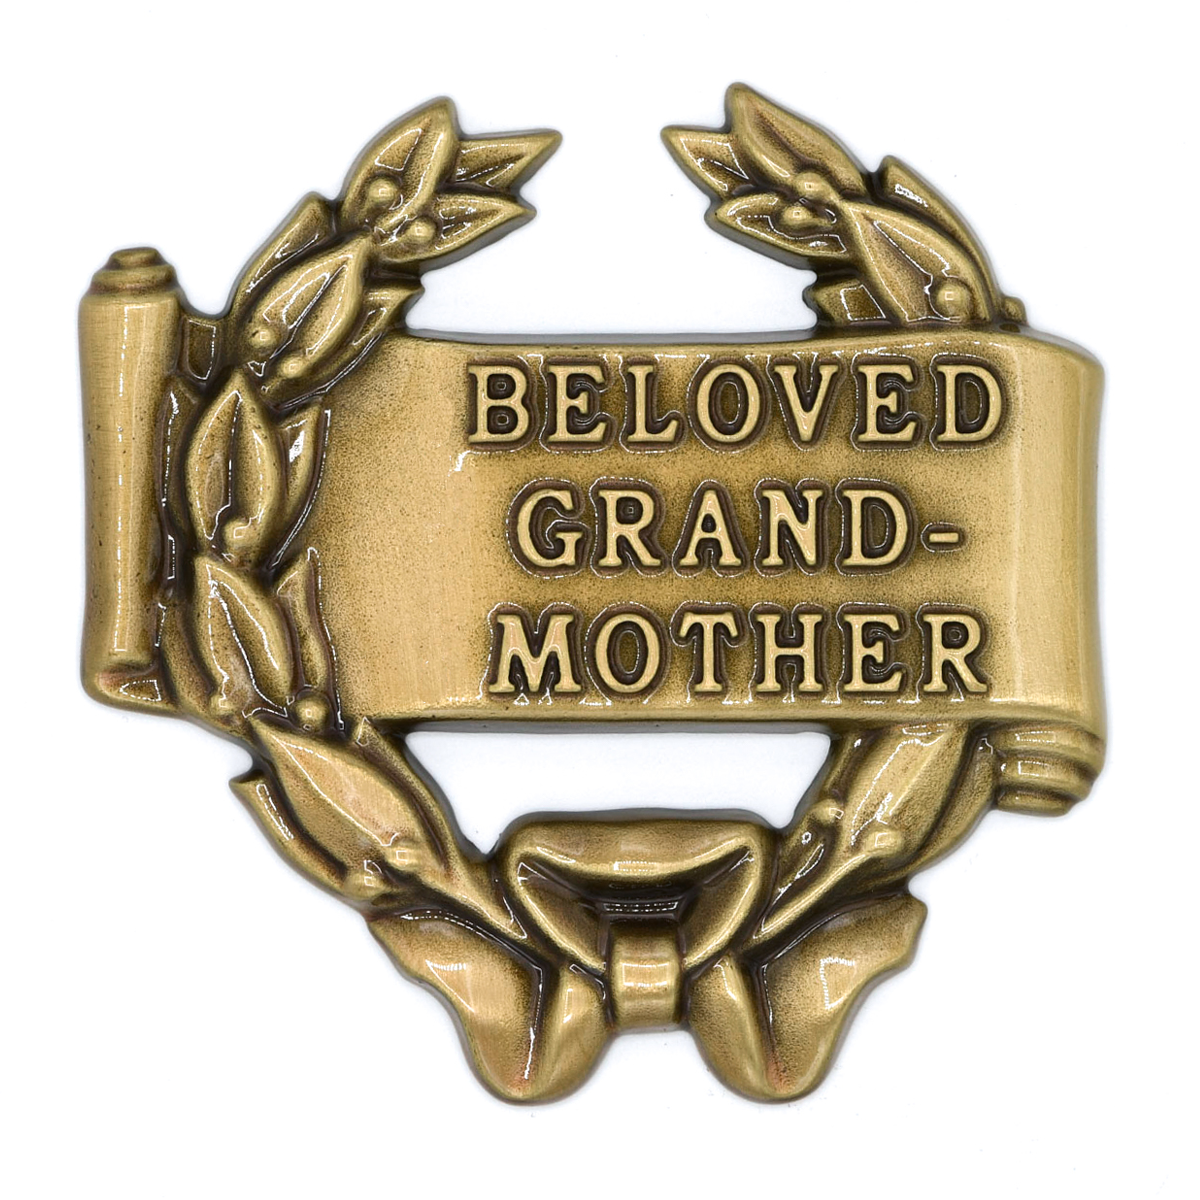 Beloved Grand-Mother 3.1 x 3.1″